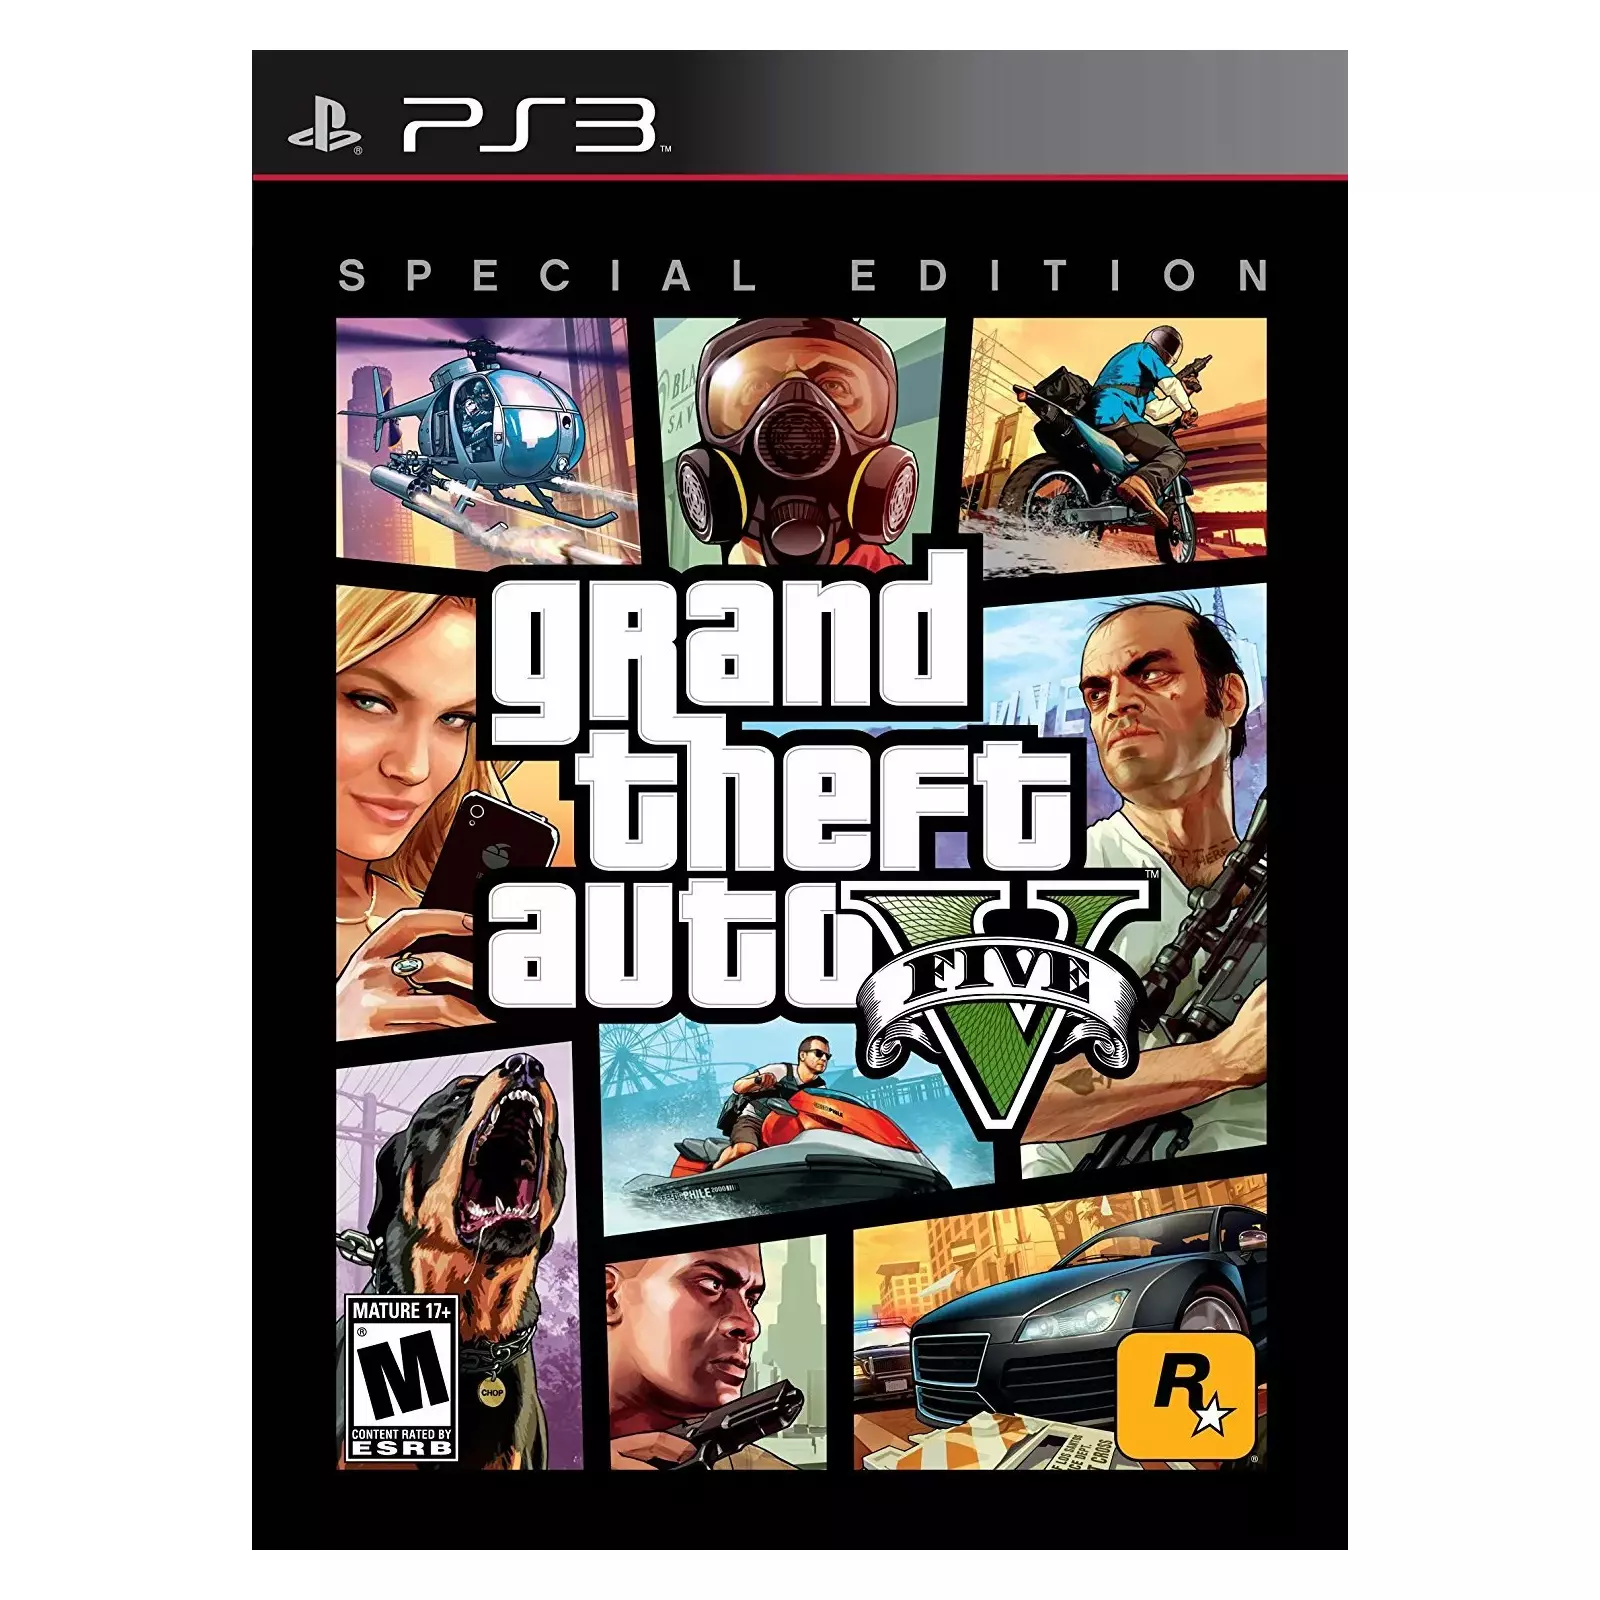 Theft ps3. ГТА 5 специал едитион на ПС 3. Игры на сони плейстейшен 3 ГТА 5. ГТА 6 на сони плейстейшен 3. Grand Theft auto IV Special Edition ps3.